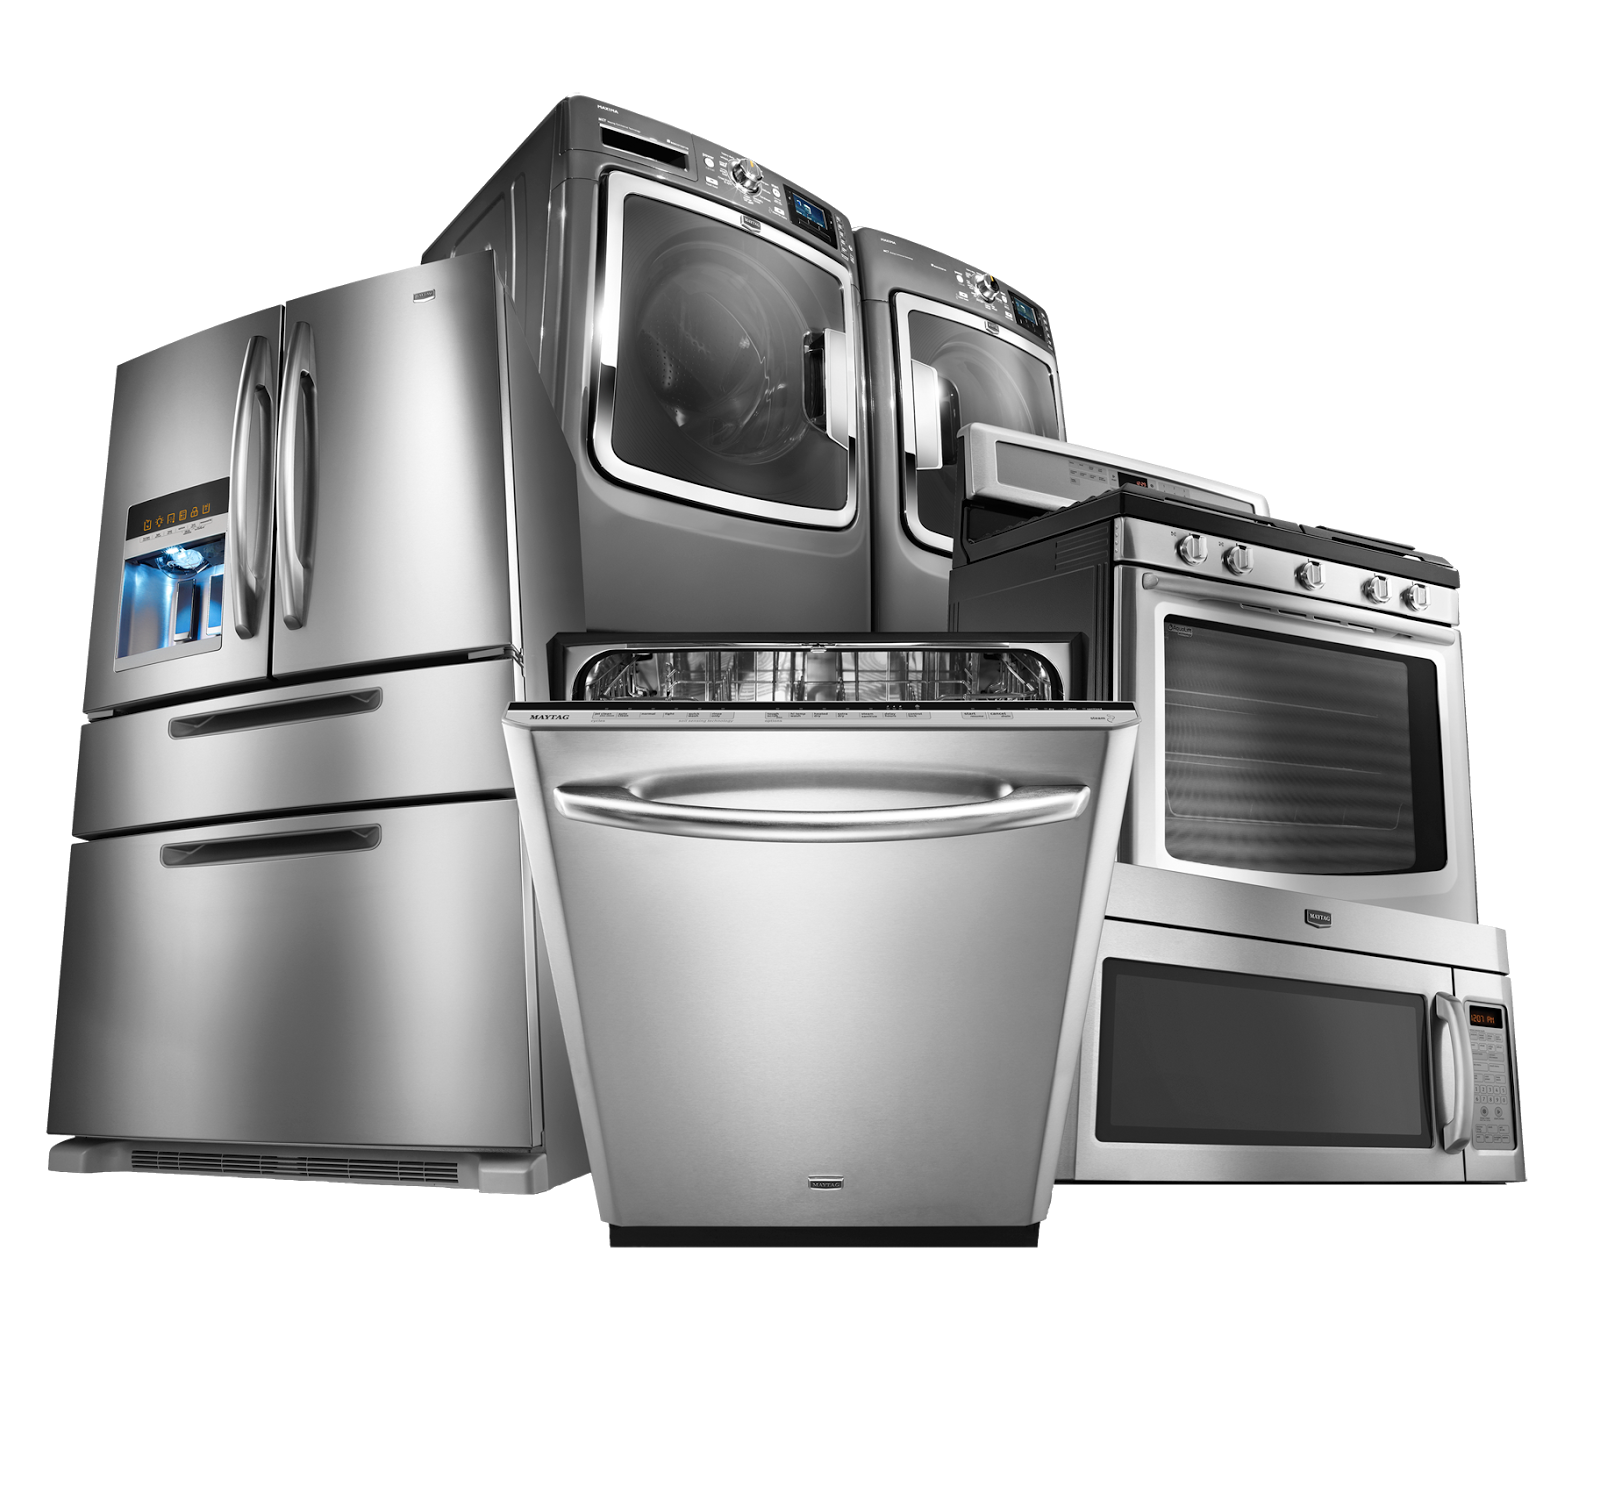 better-appliances-adrian-designs